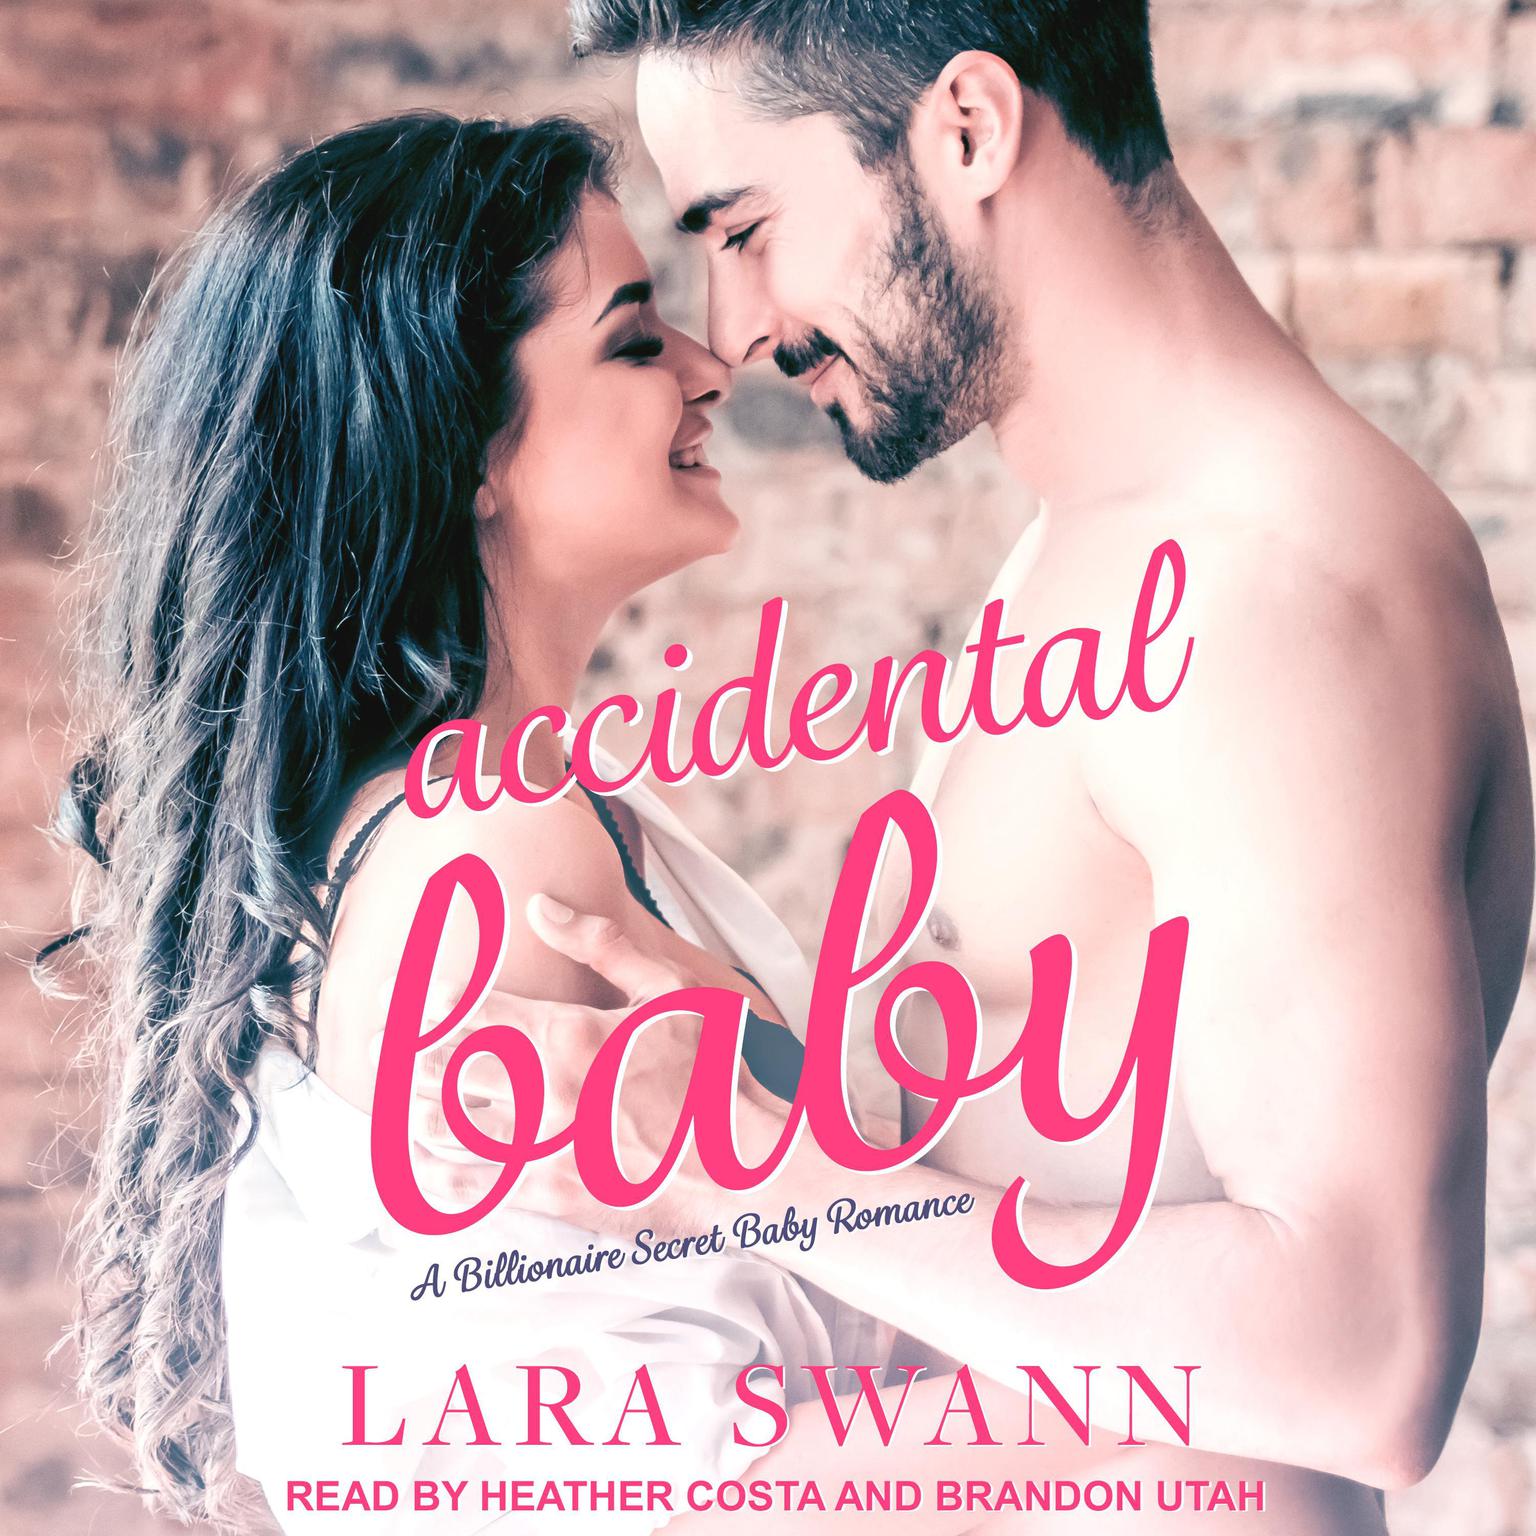 Accidental Baby: A Billionaire Secret Baby Romance Audiobook, by Lara Swann